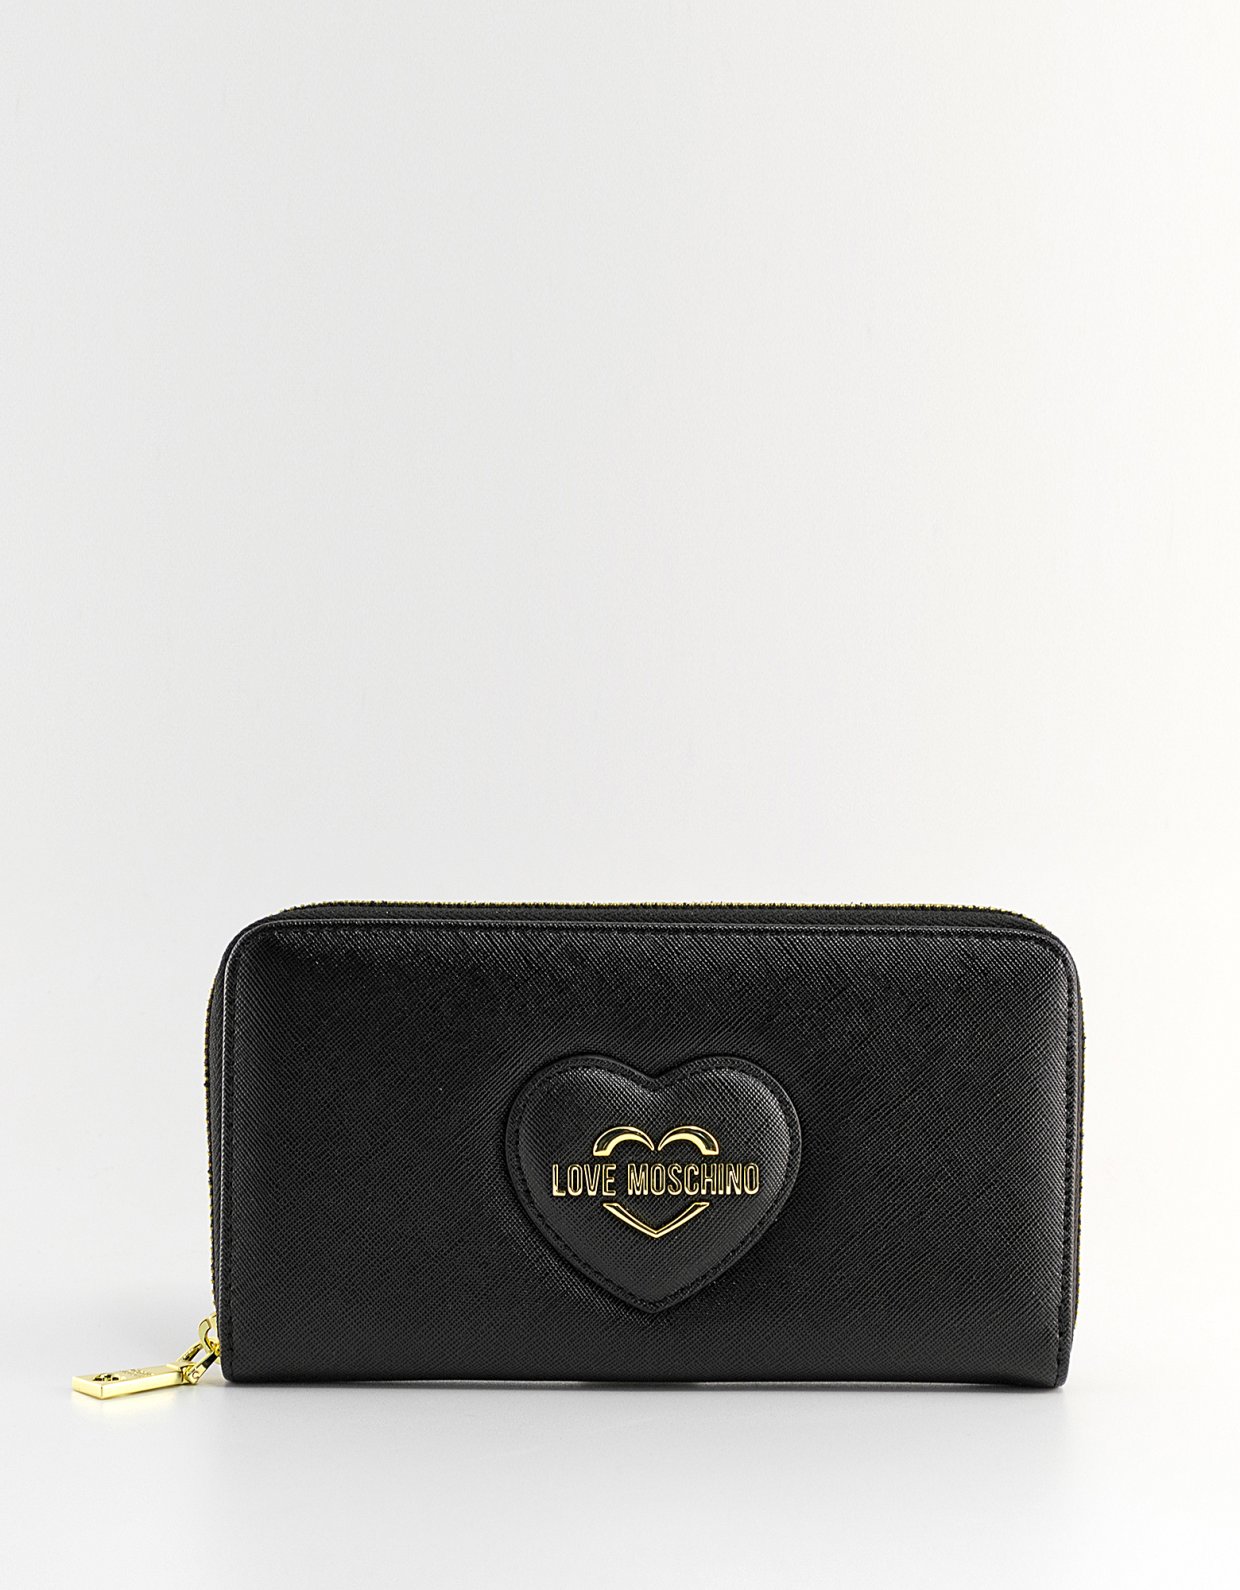 Love Moschino Sweet heart wallet black